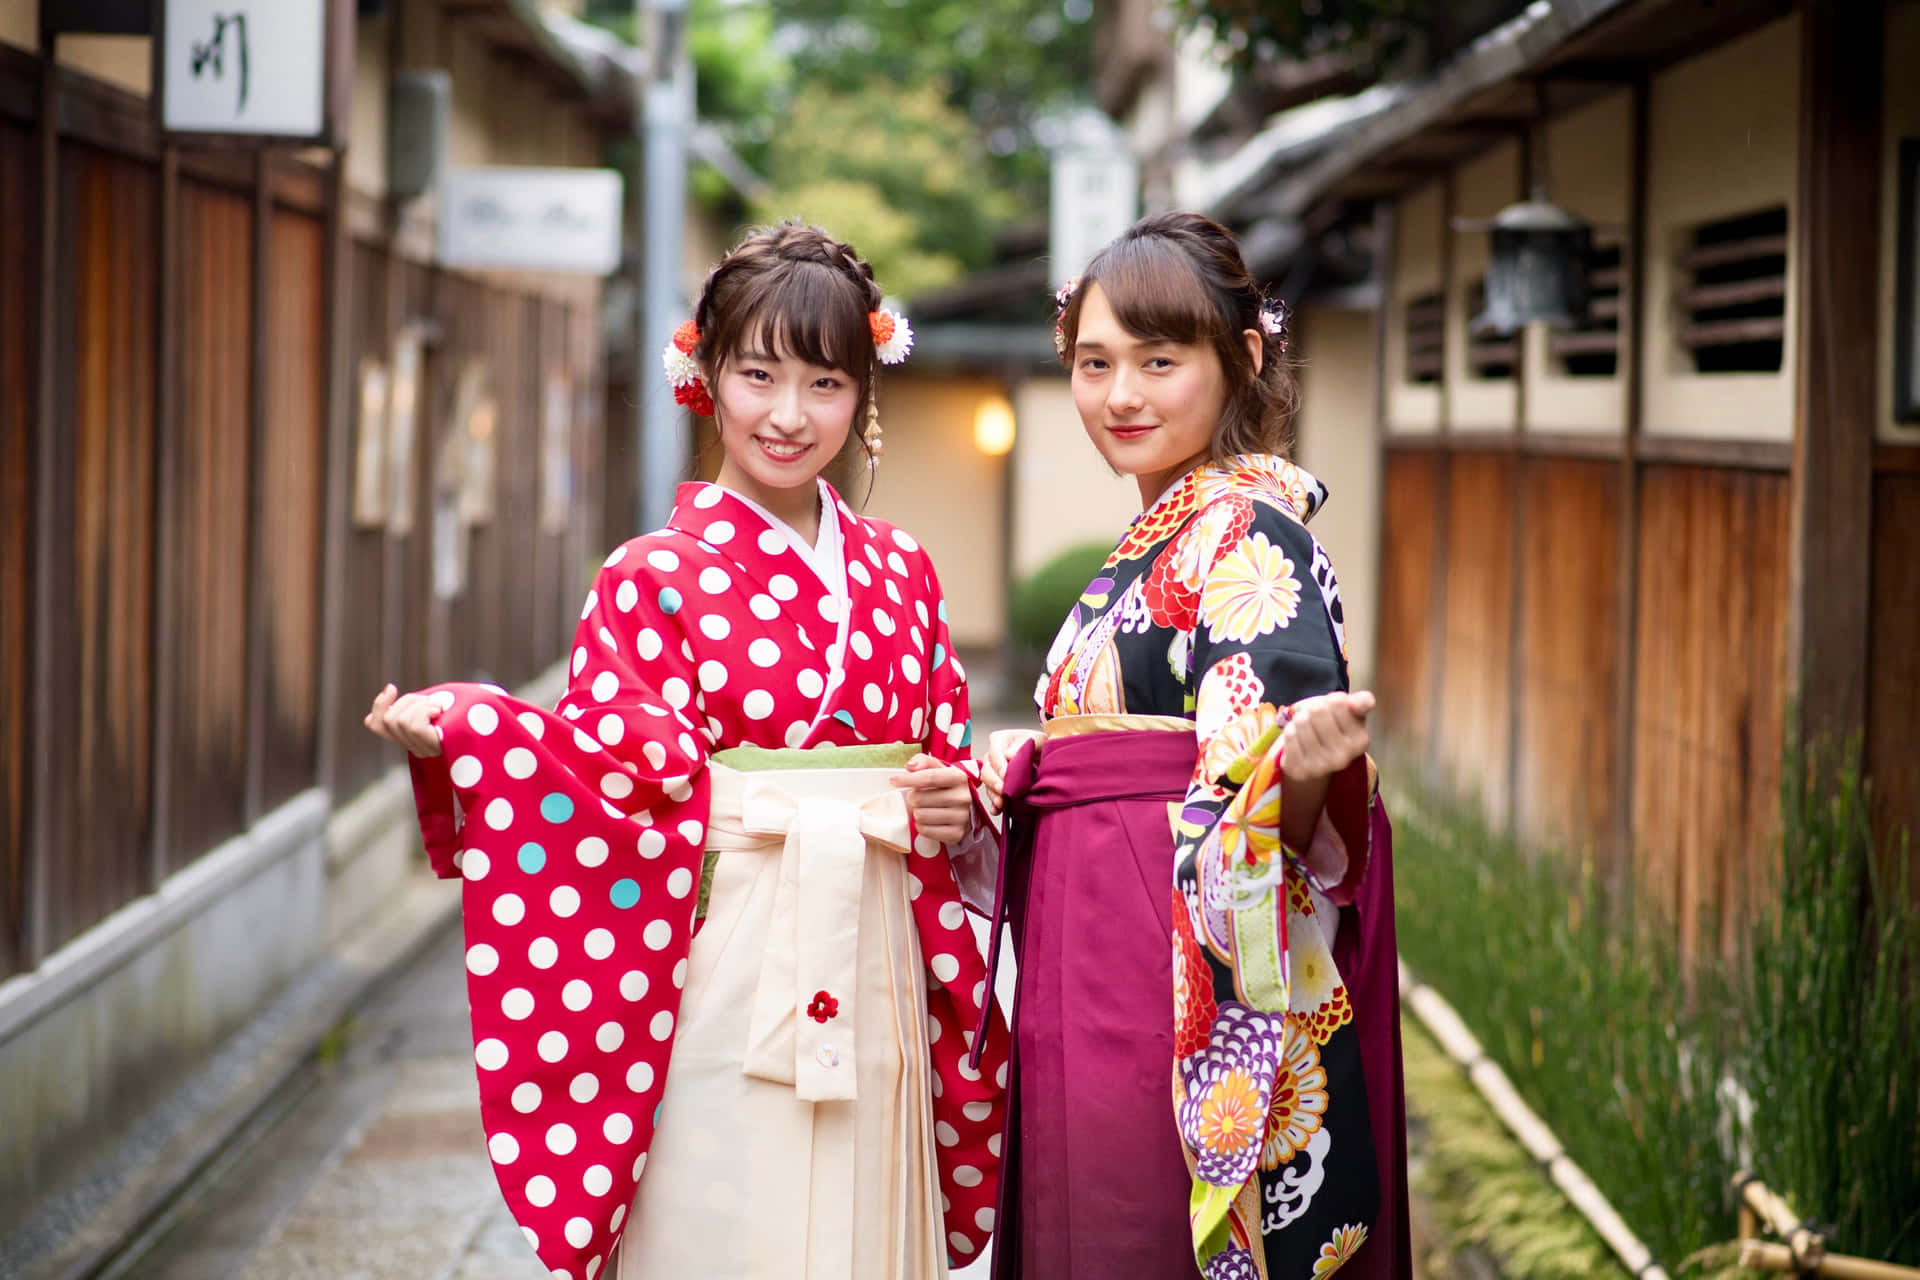 Traditional Kimono - The Fashion of Japan